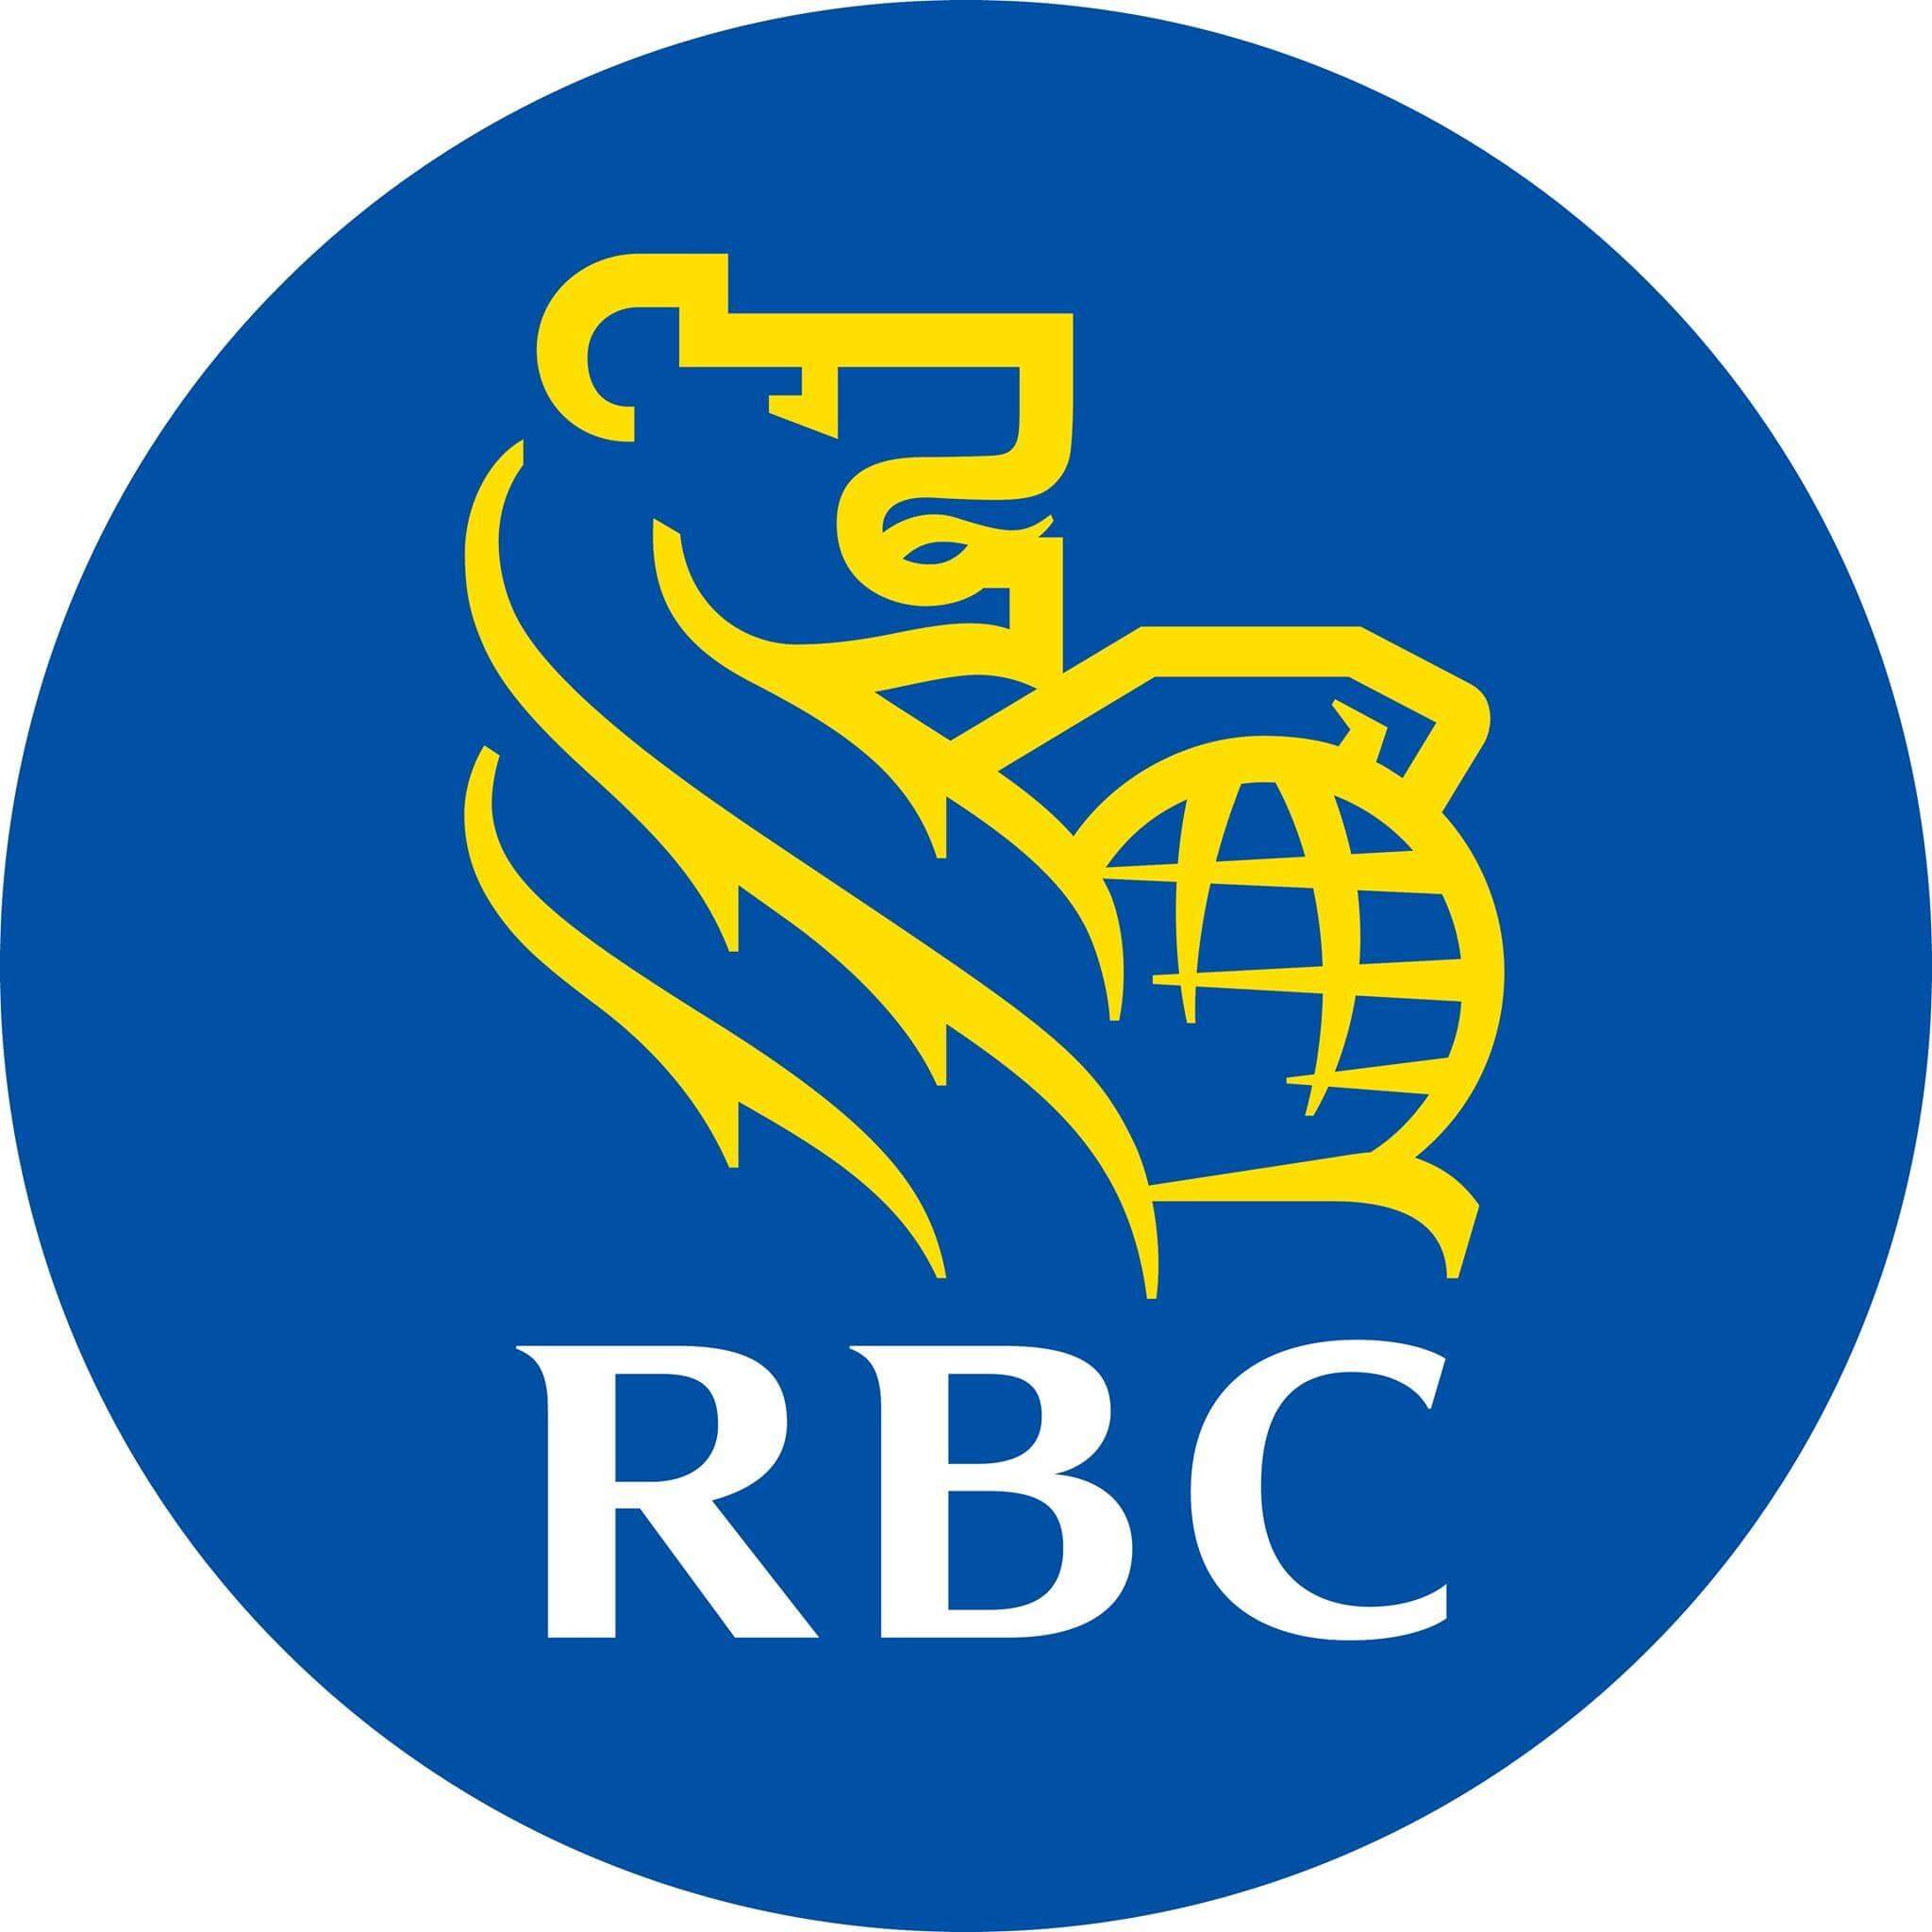 RBC-logo